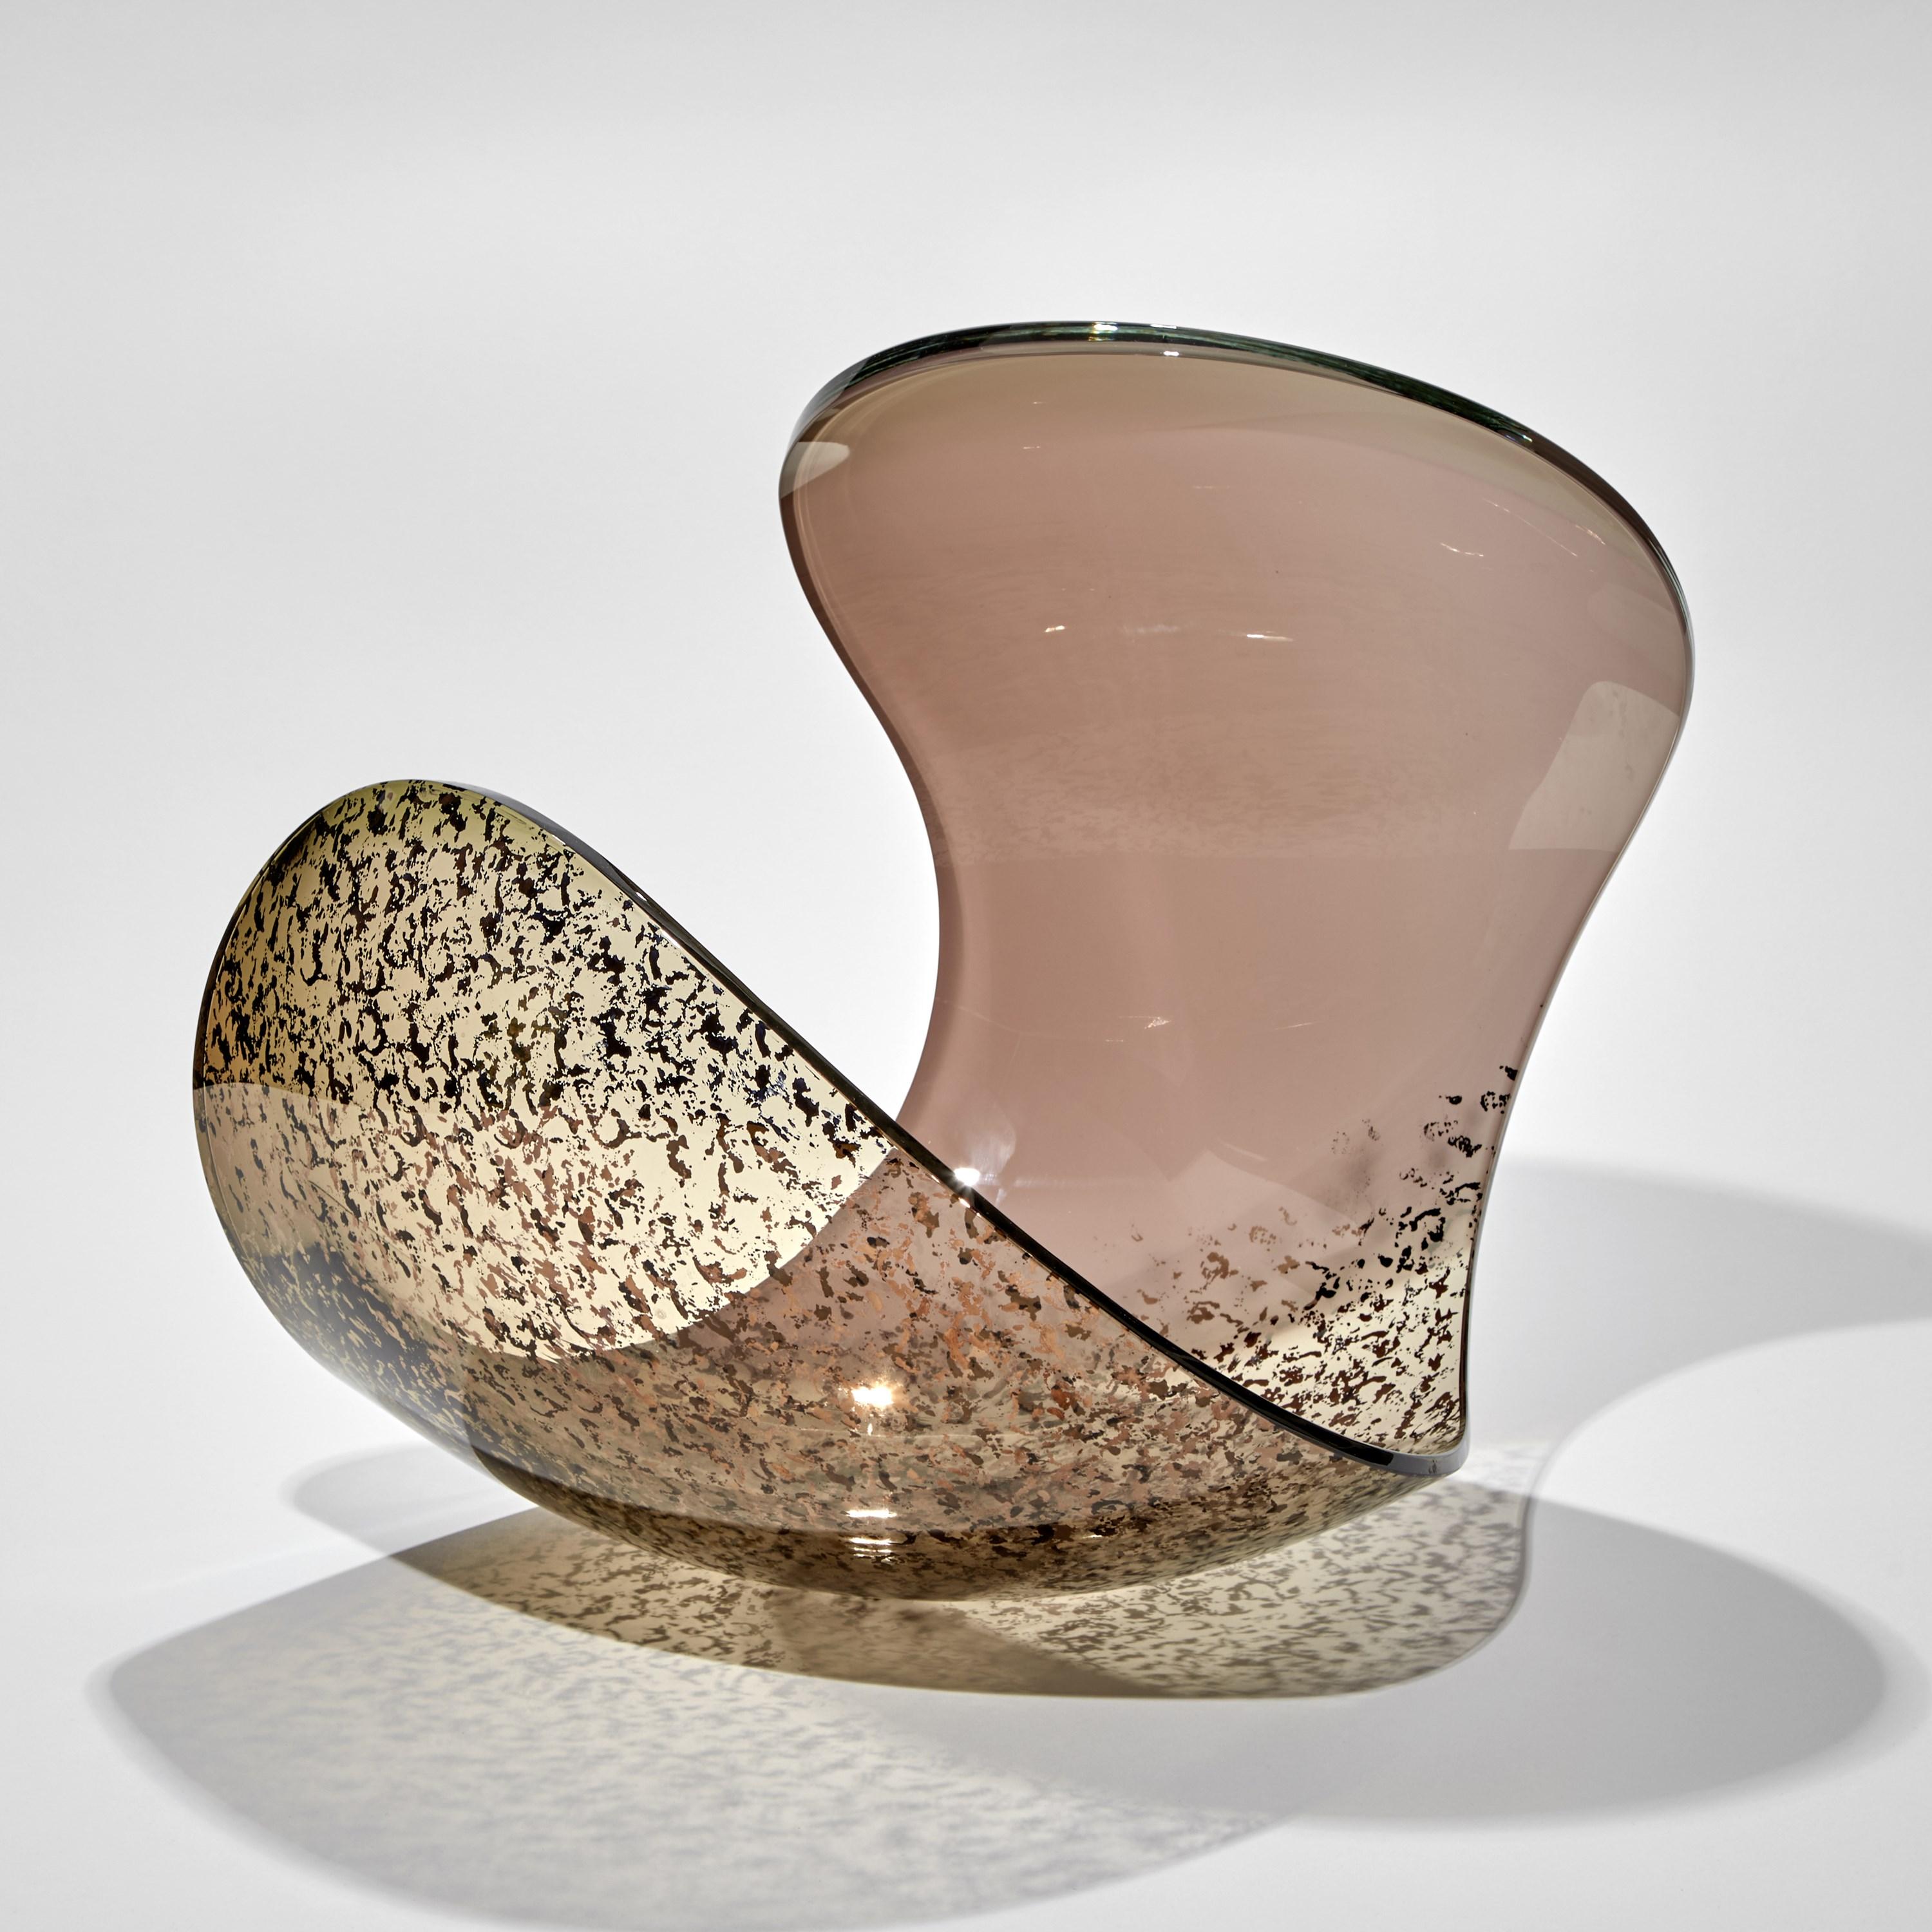 Organic Modern Planet in Pink, Brown & Gold, a Glass Sculpture & Centrepiece by Lena Bergström